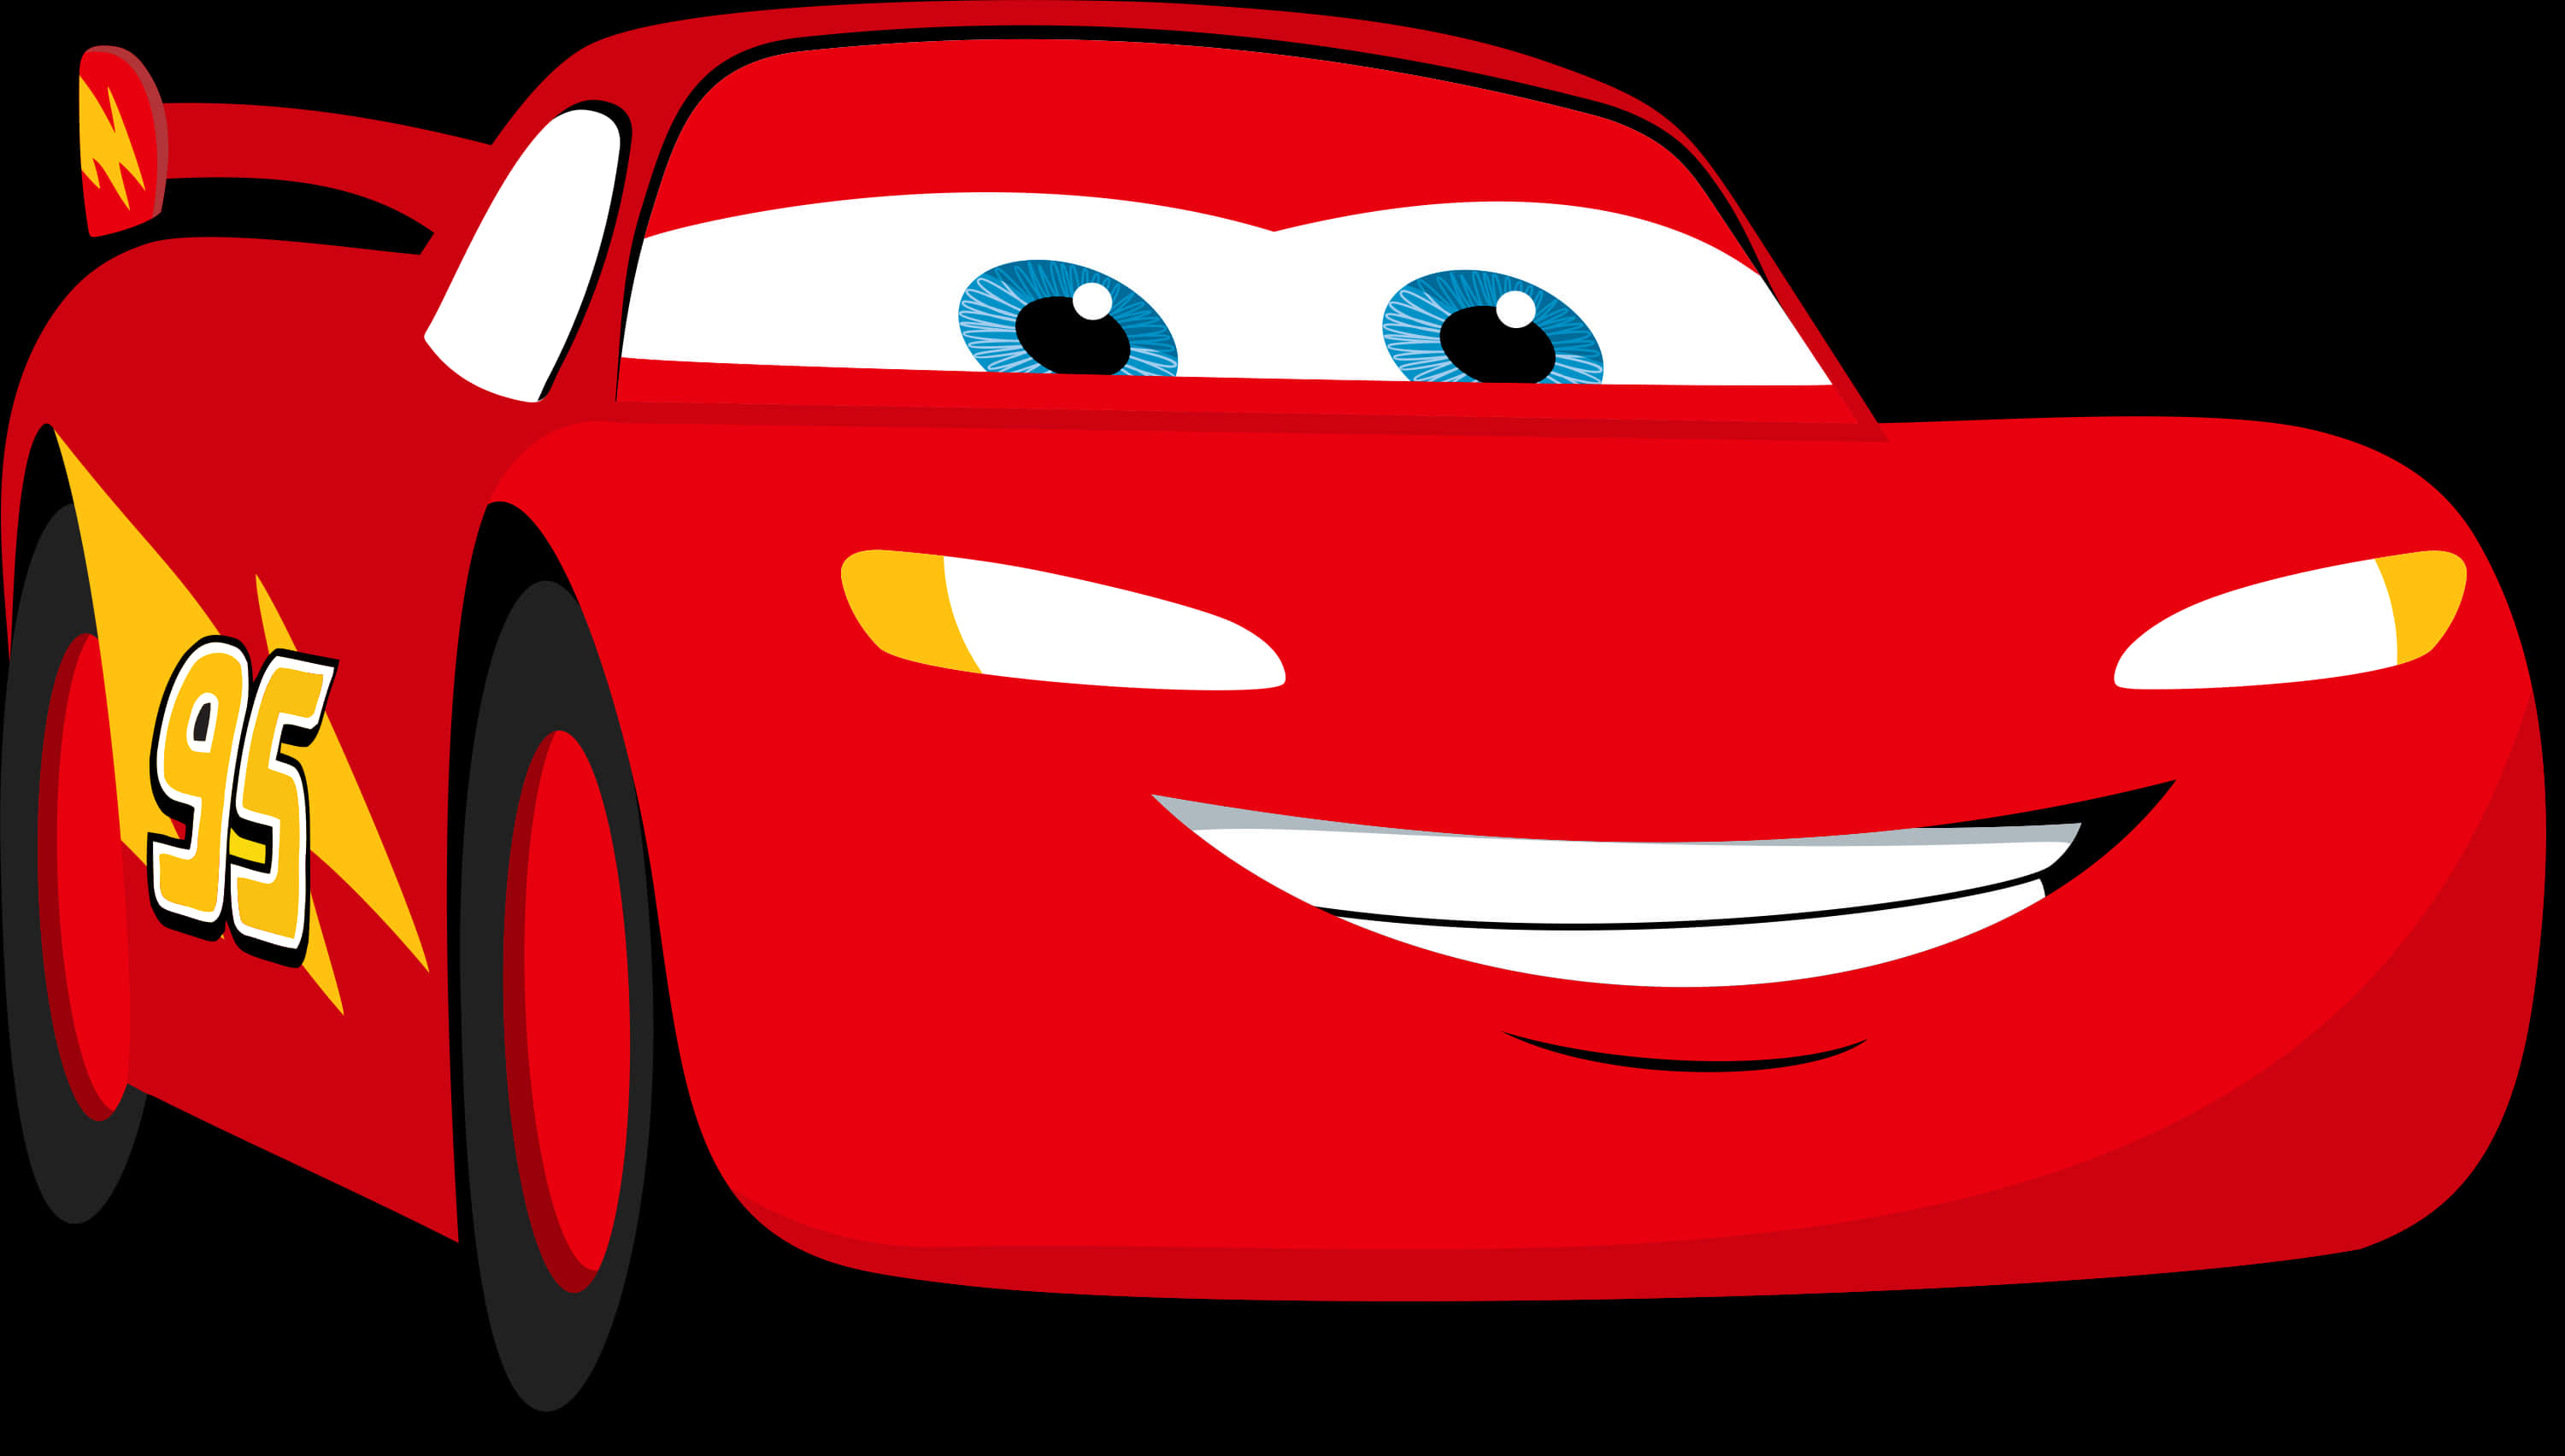 A Cartoon Red Car With Blue Eyes